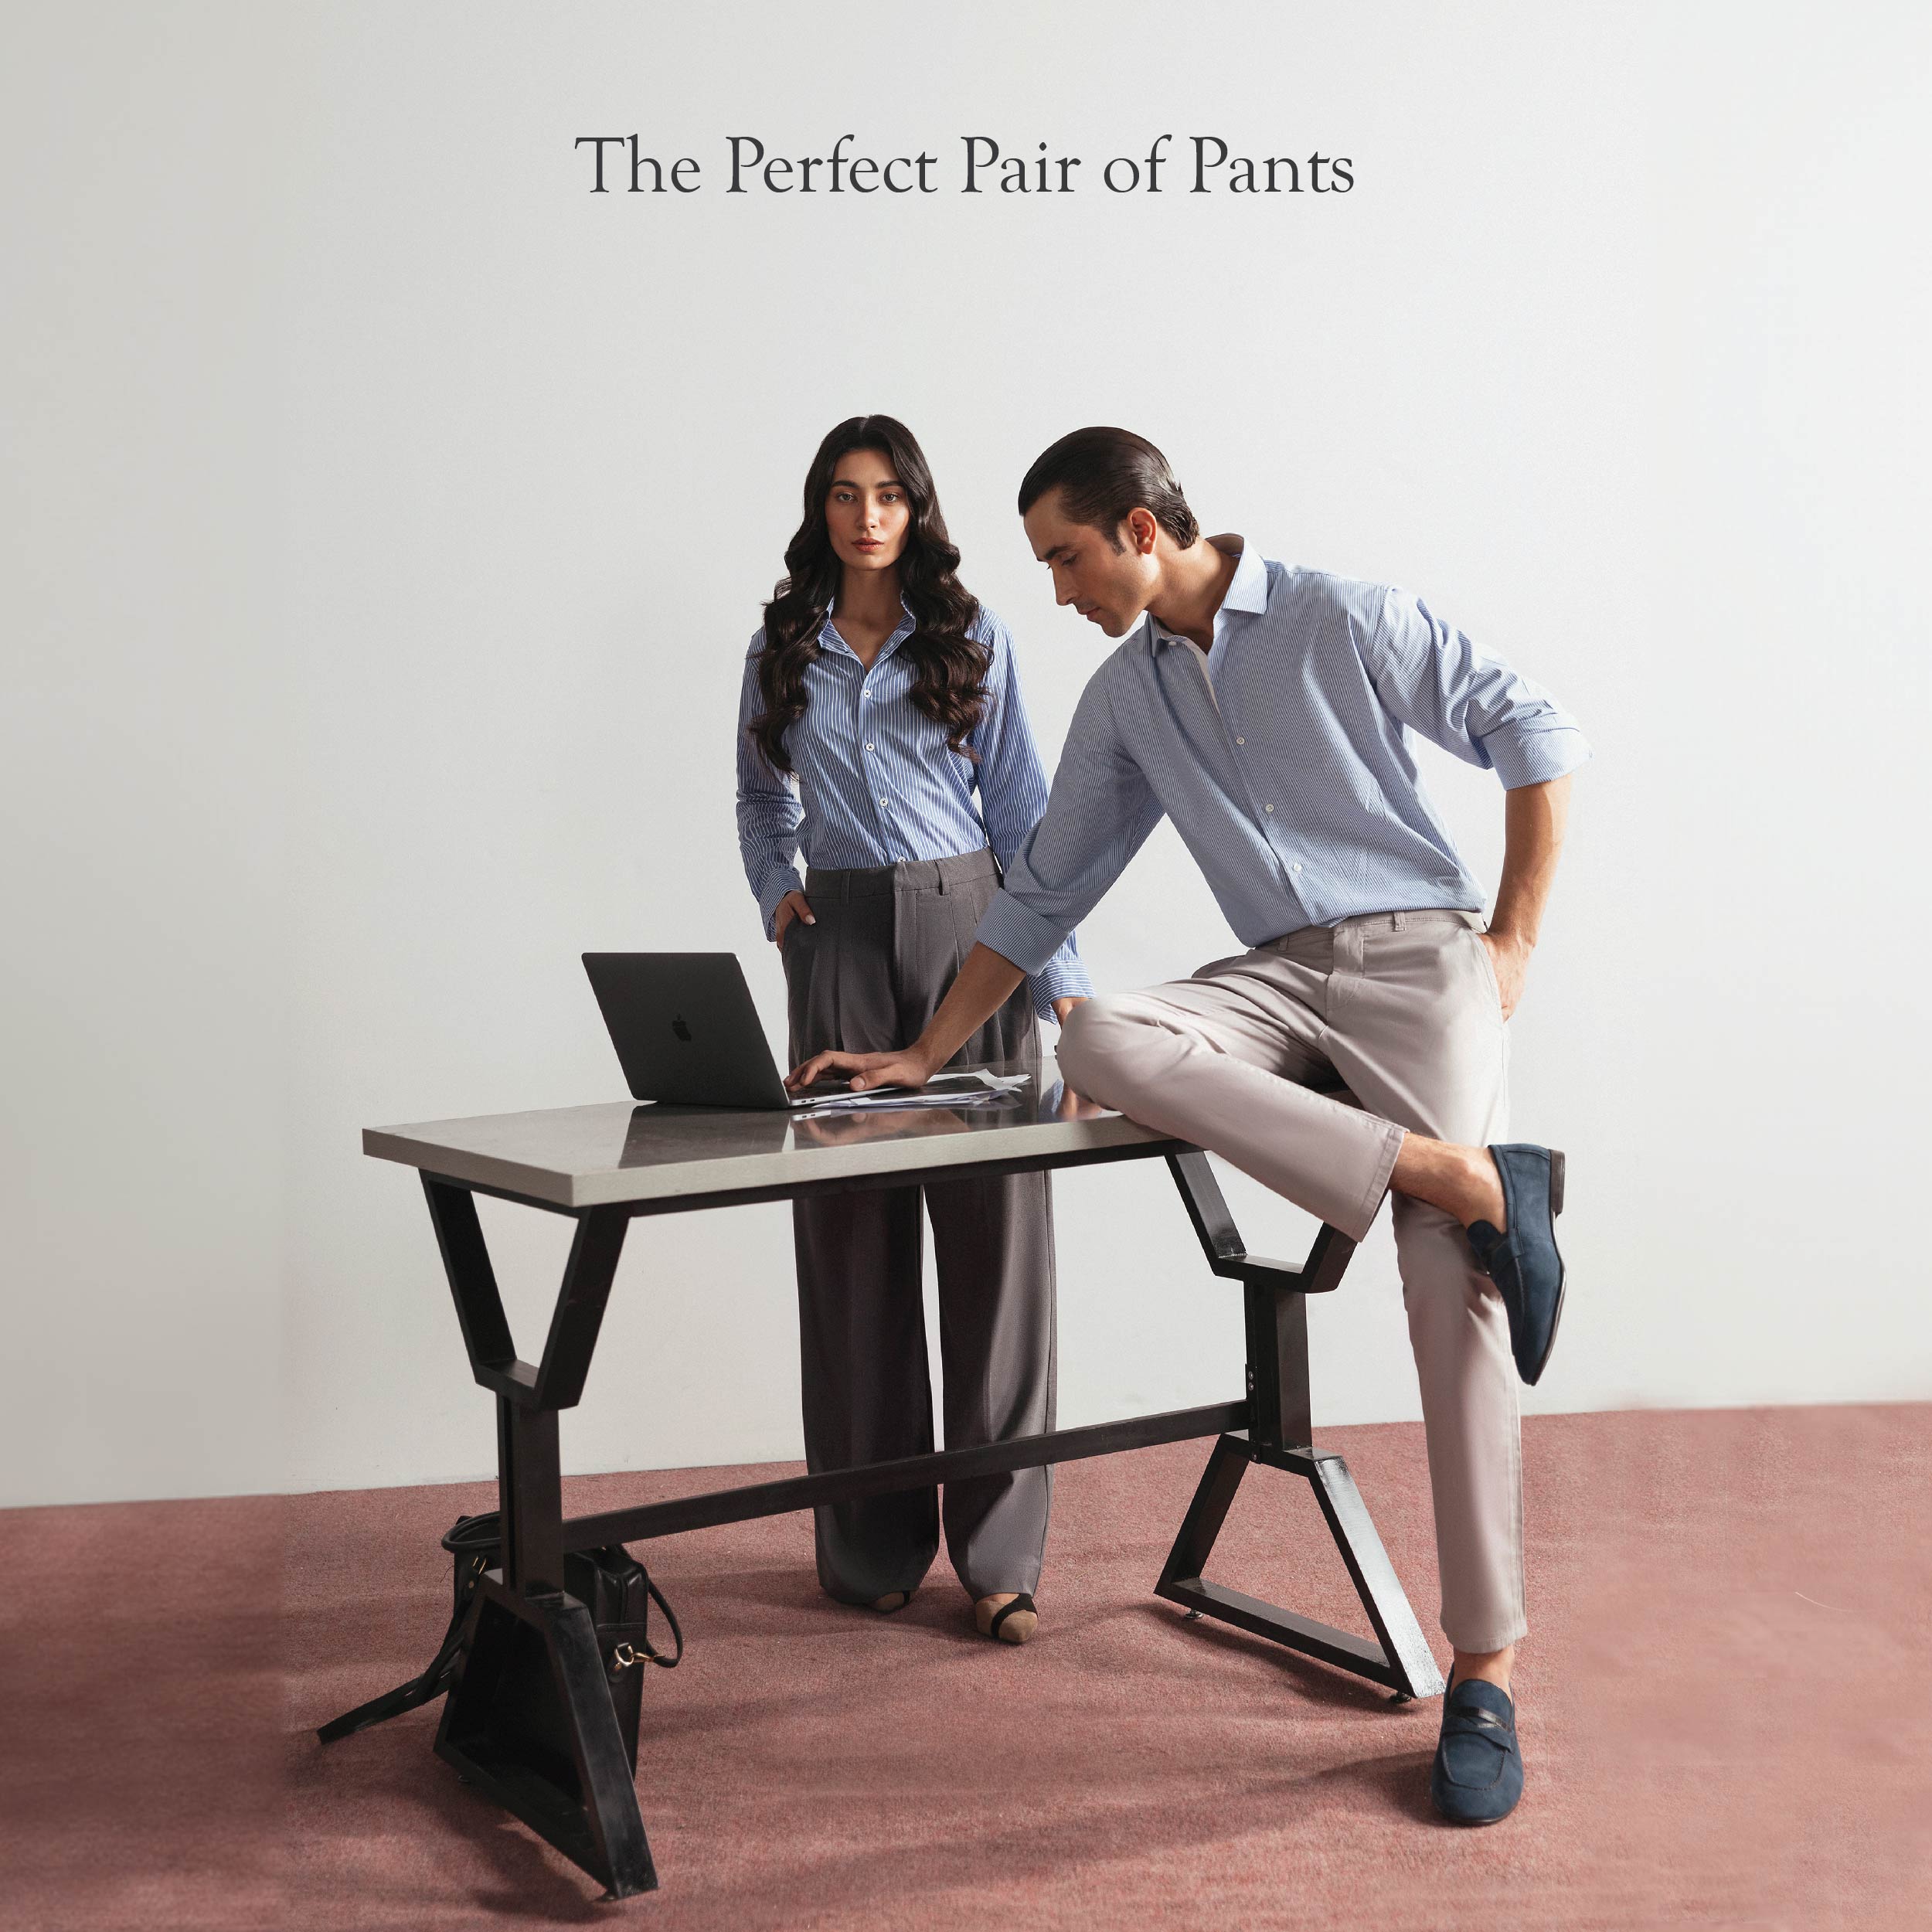 Amazon.com: Leonora's Perfect Fit Pants (A Couturier Pattern)